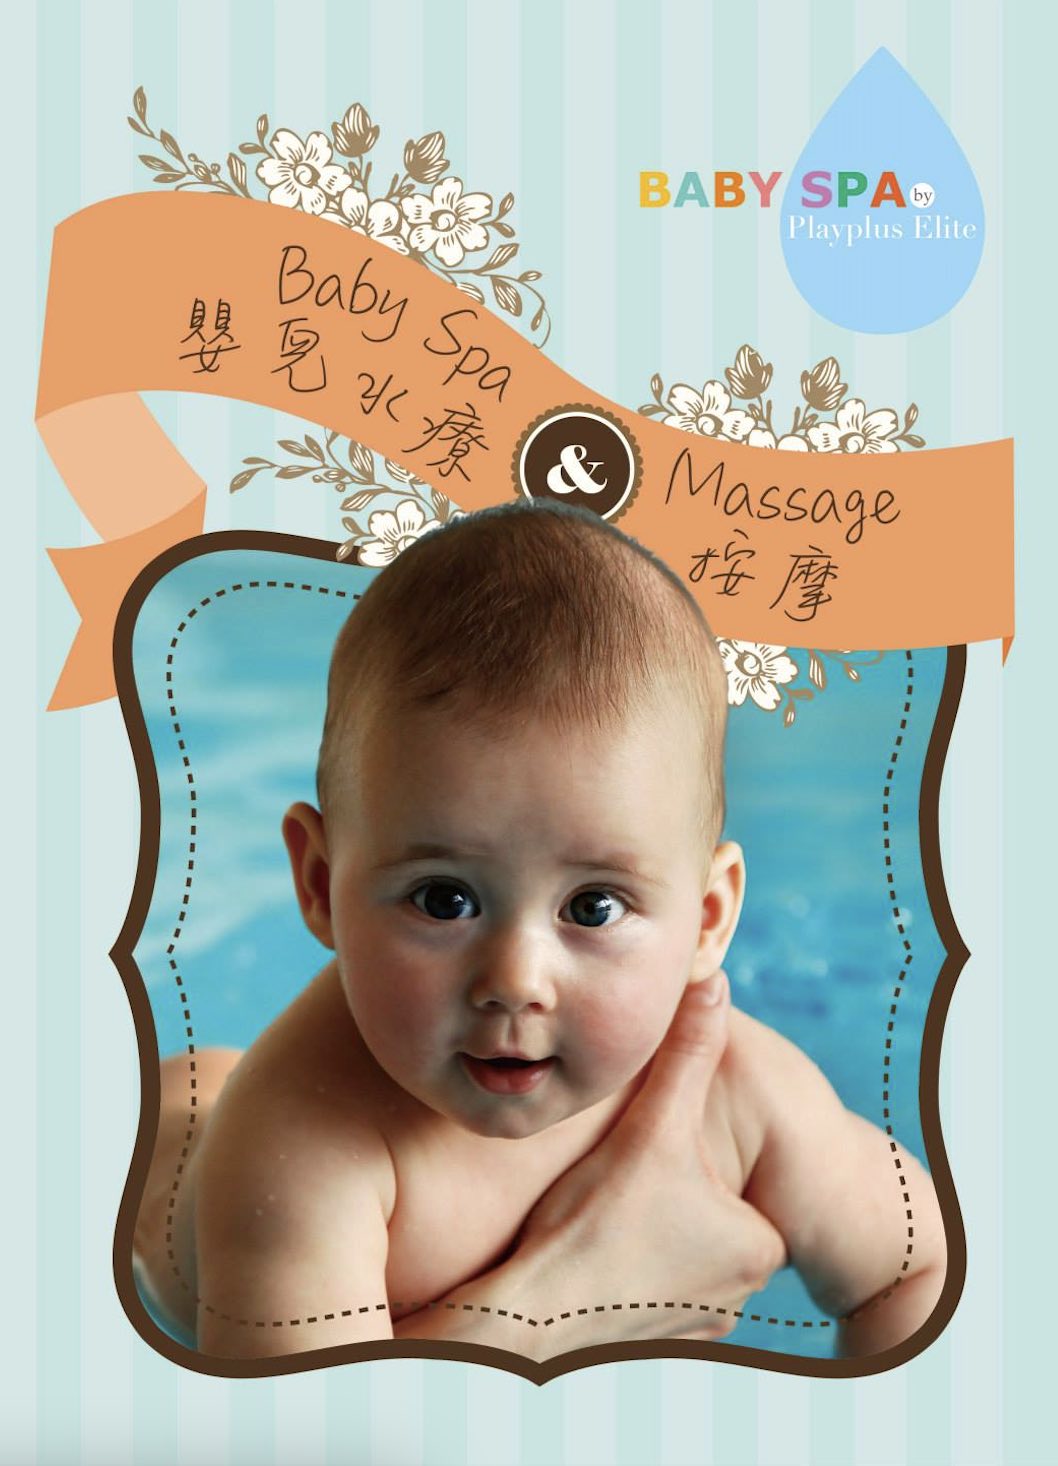 Playplus Baby Spa的特許經營香港區加盟店項目2